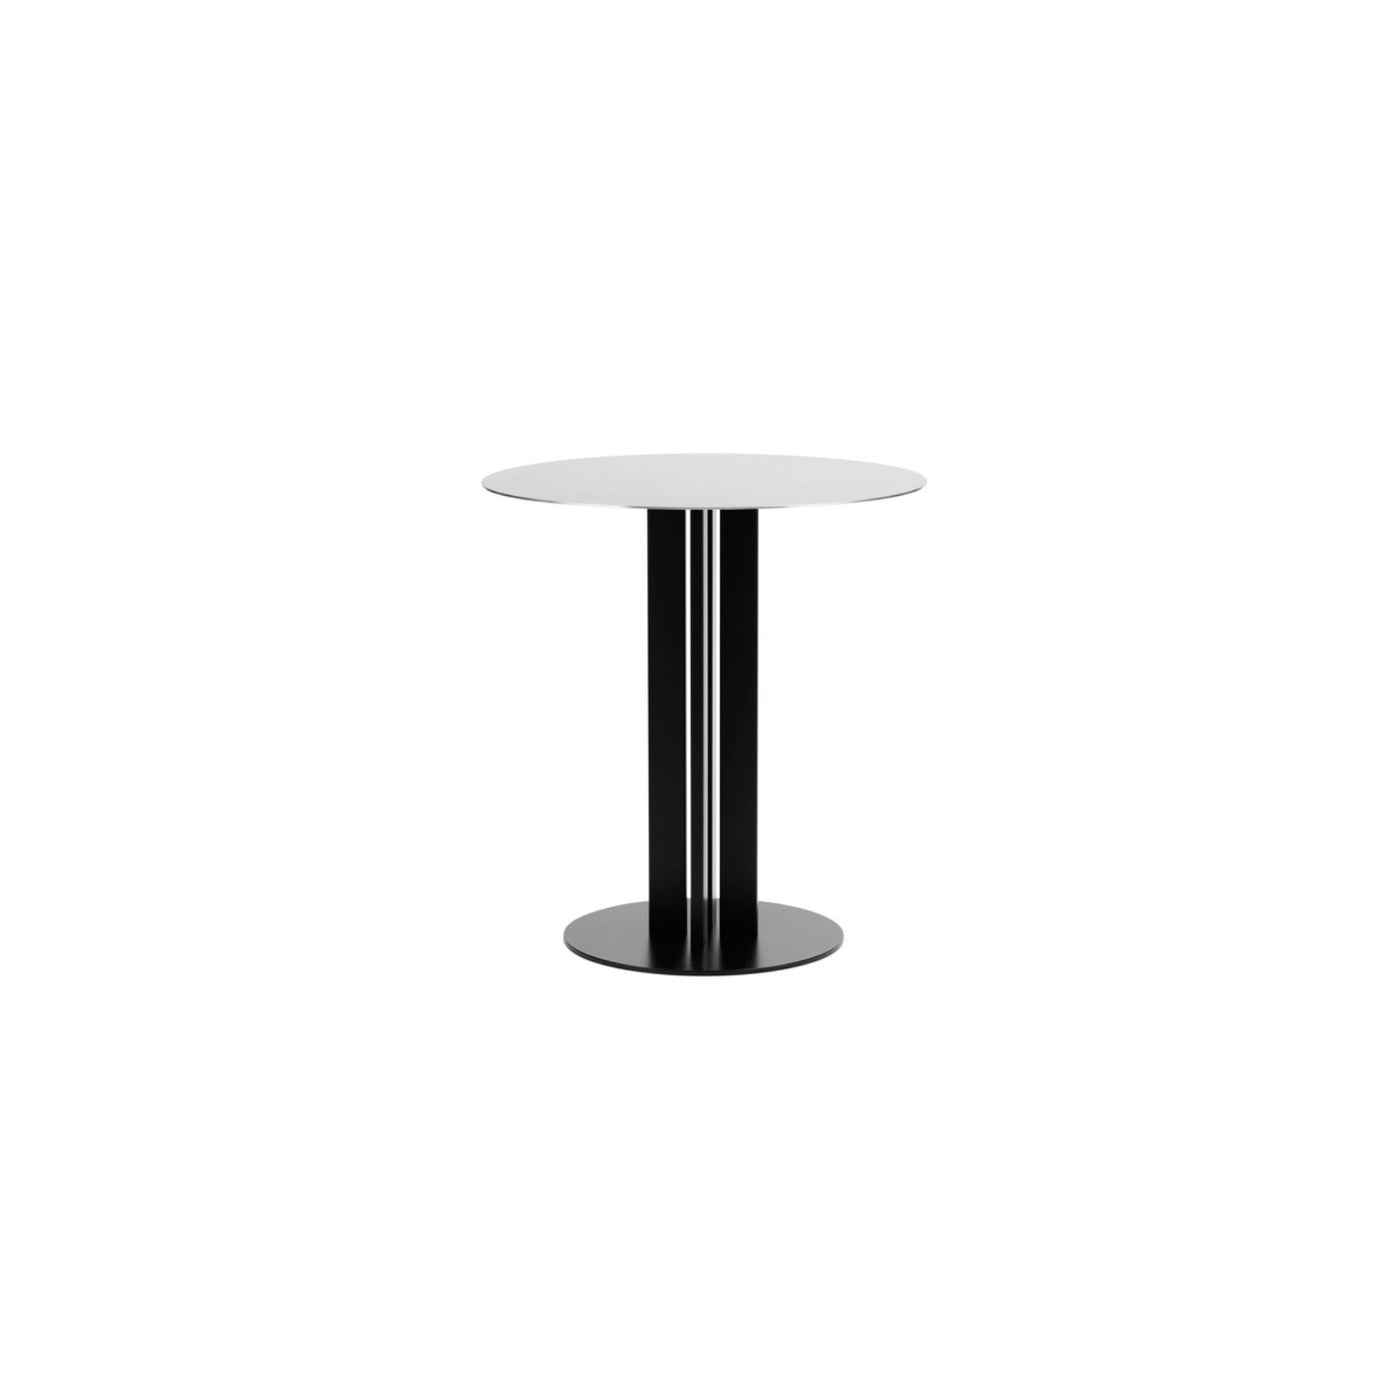 Normann Copenhagen Scala Café Table. Shop now at someday designs. #colour_stainless-steel